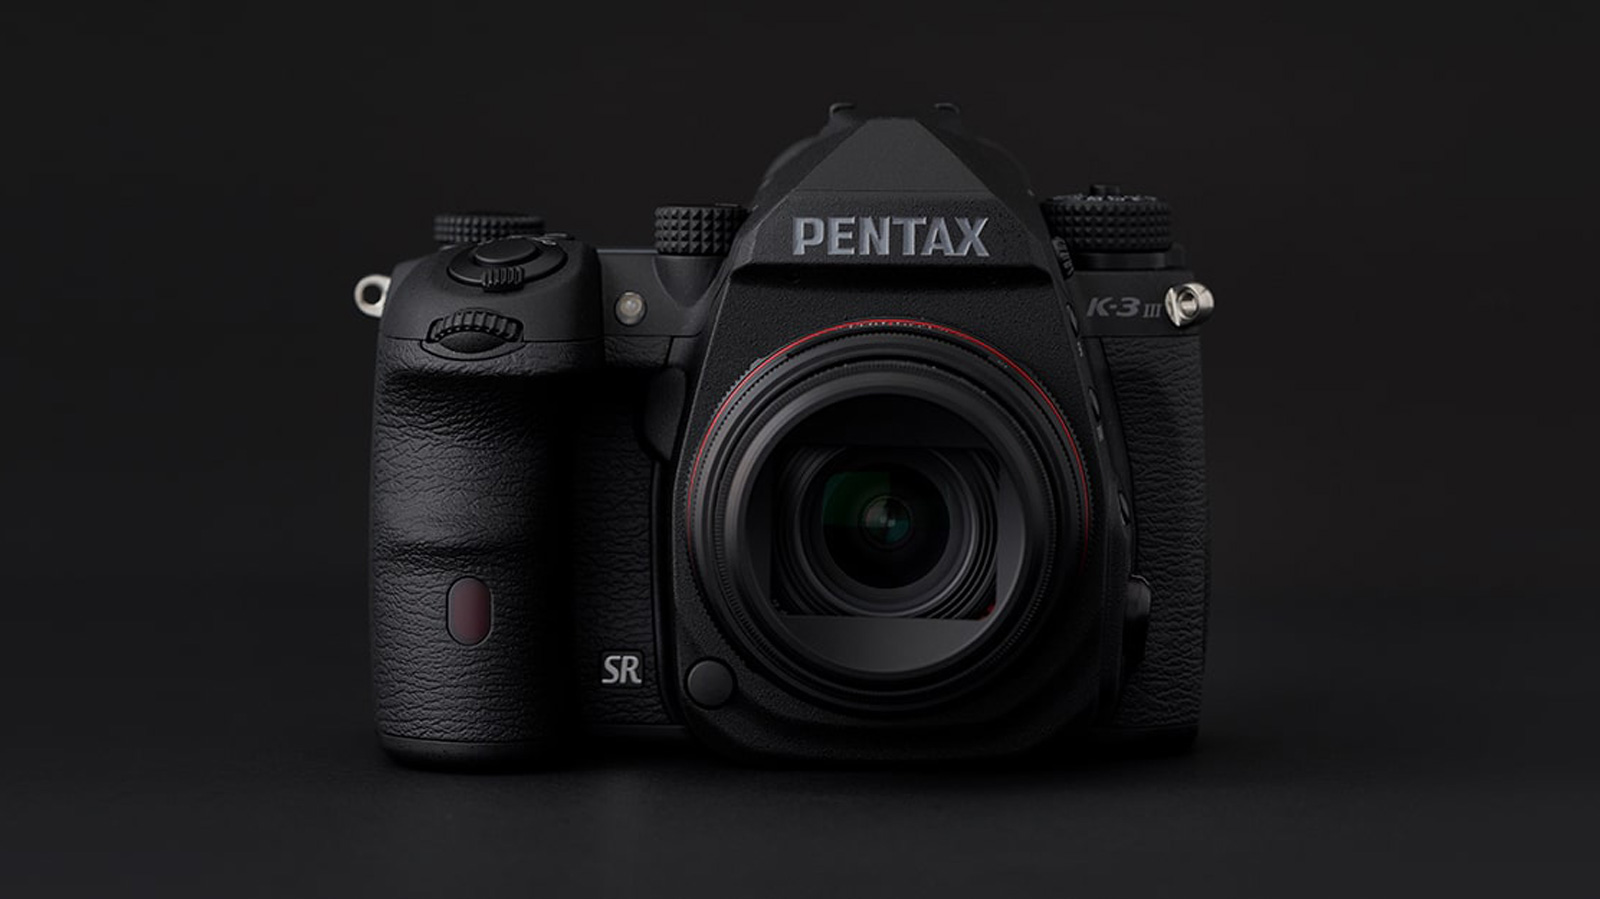 New gear: Pentax K-3 III Monochrome DSLR| Popular Photography